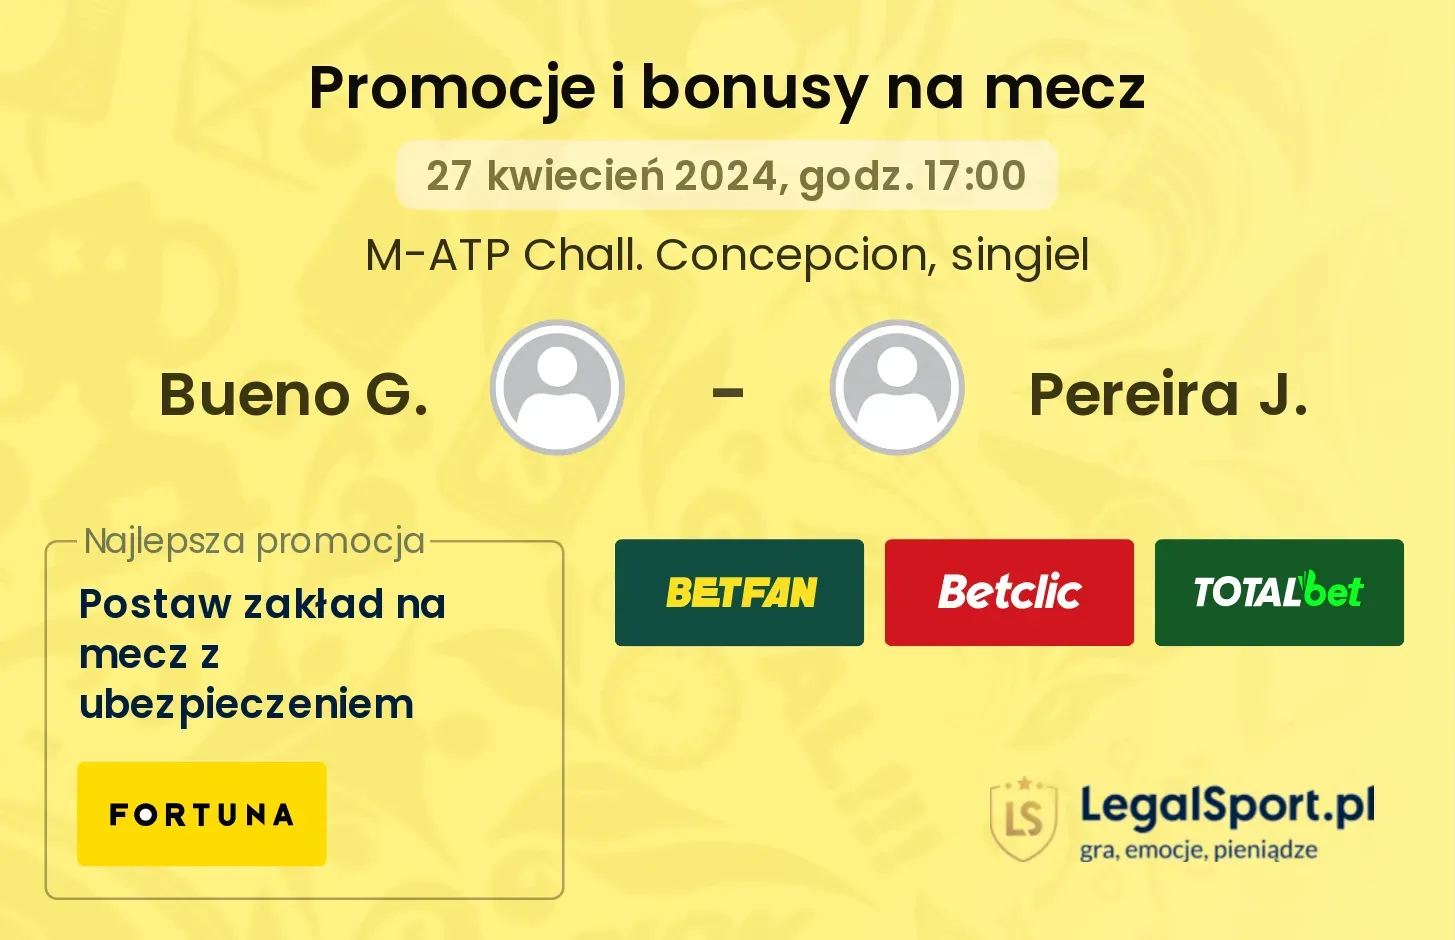 Bueno G. - Pereira J. promocje bonusy na mecz